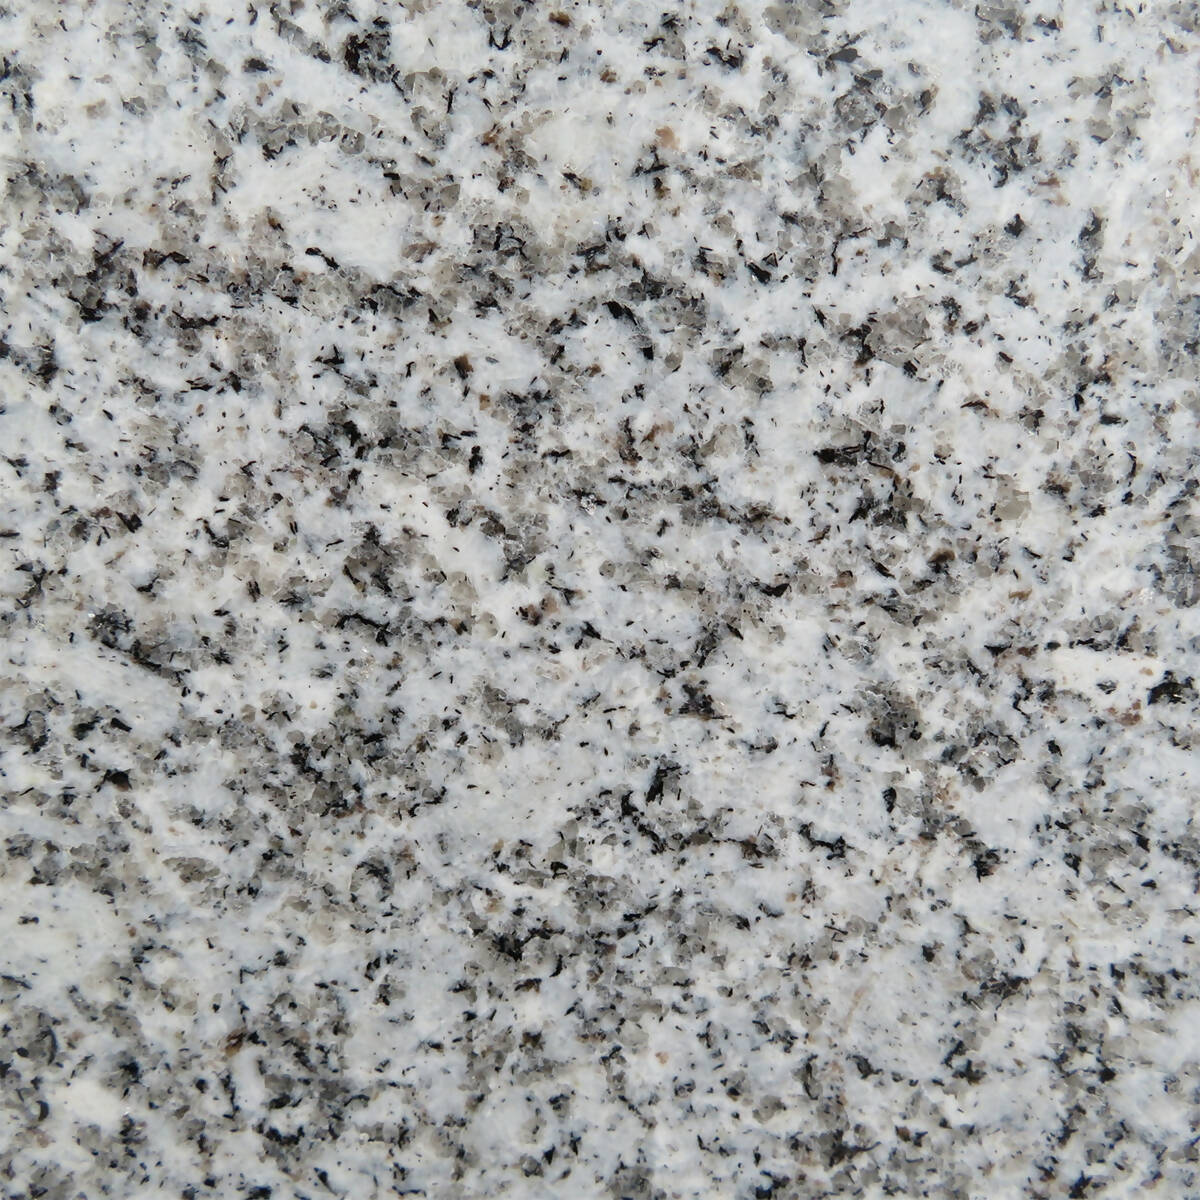 SARDO GREY GRANITE,Granite,KSG UK LTD,www.work-tops.com